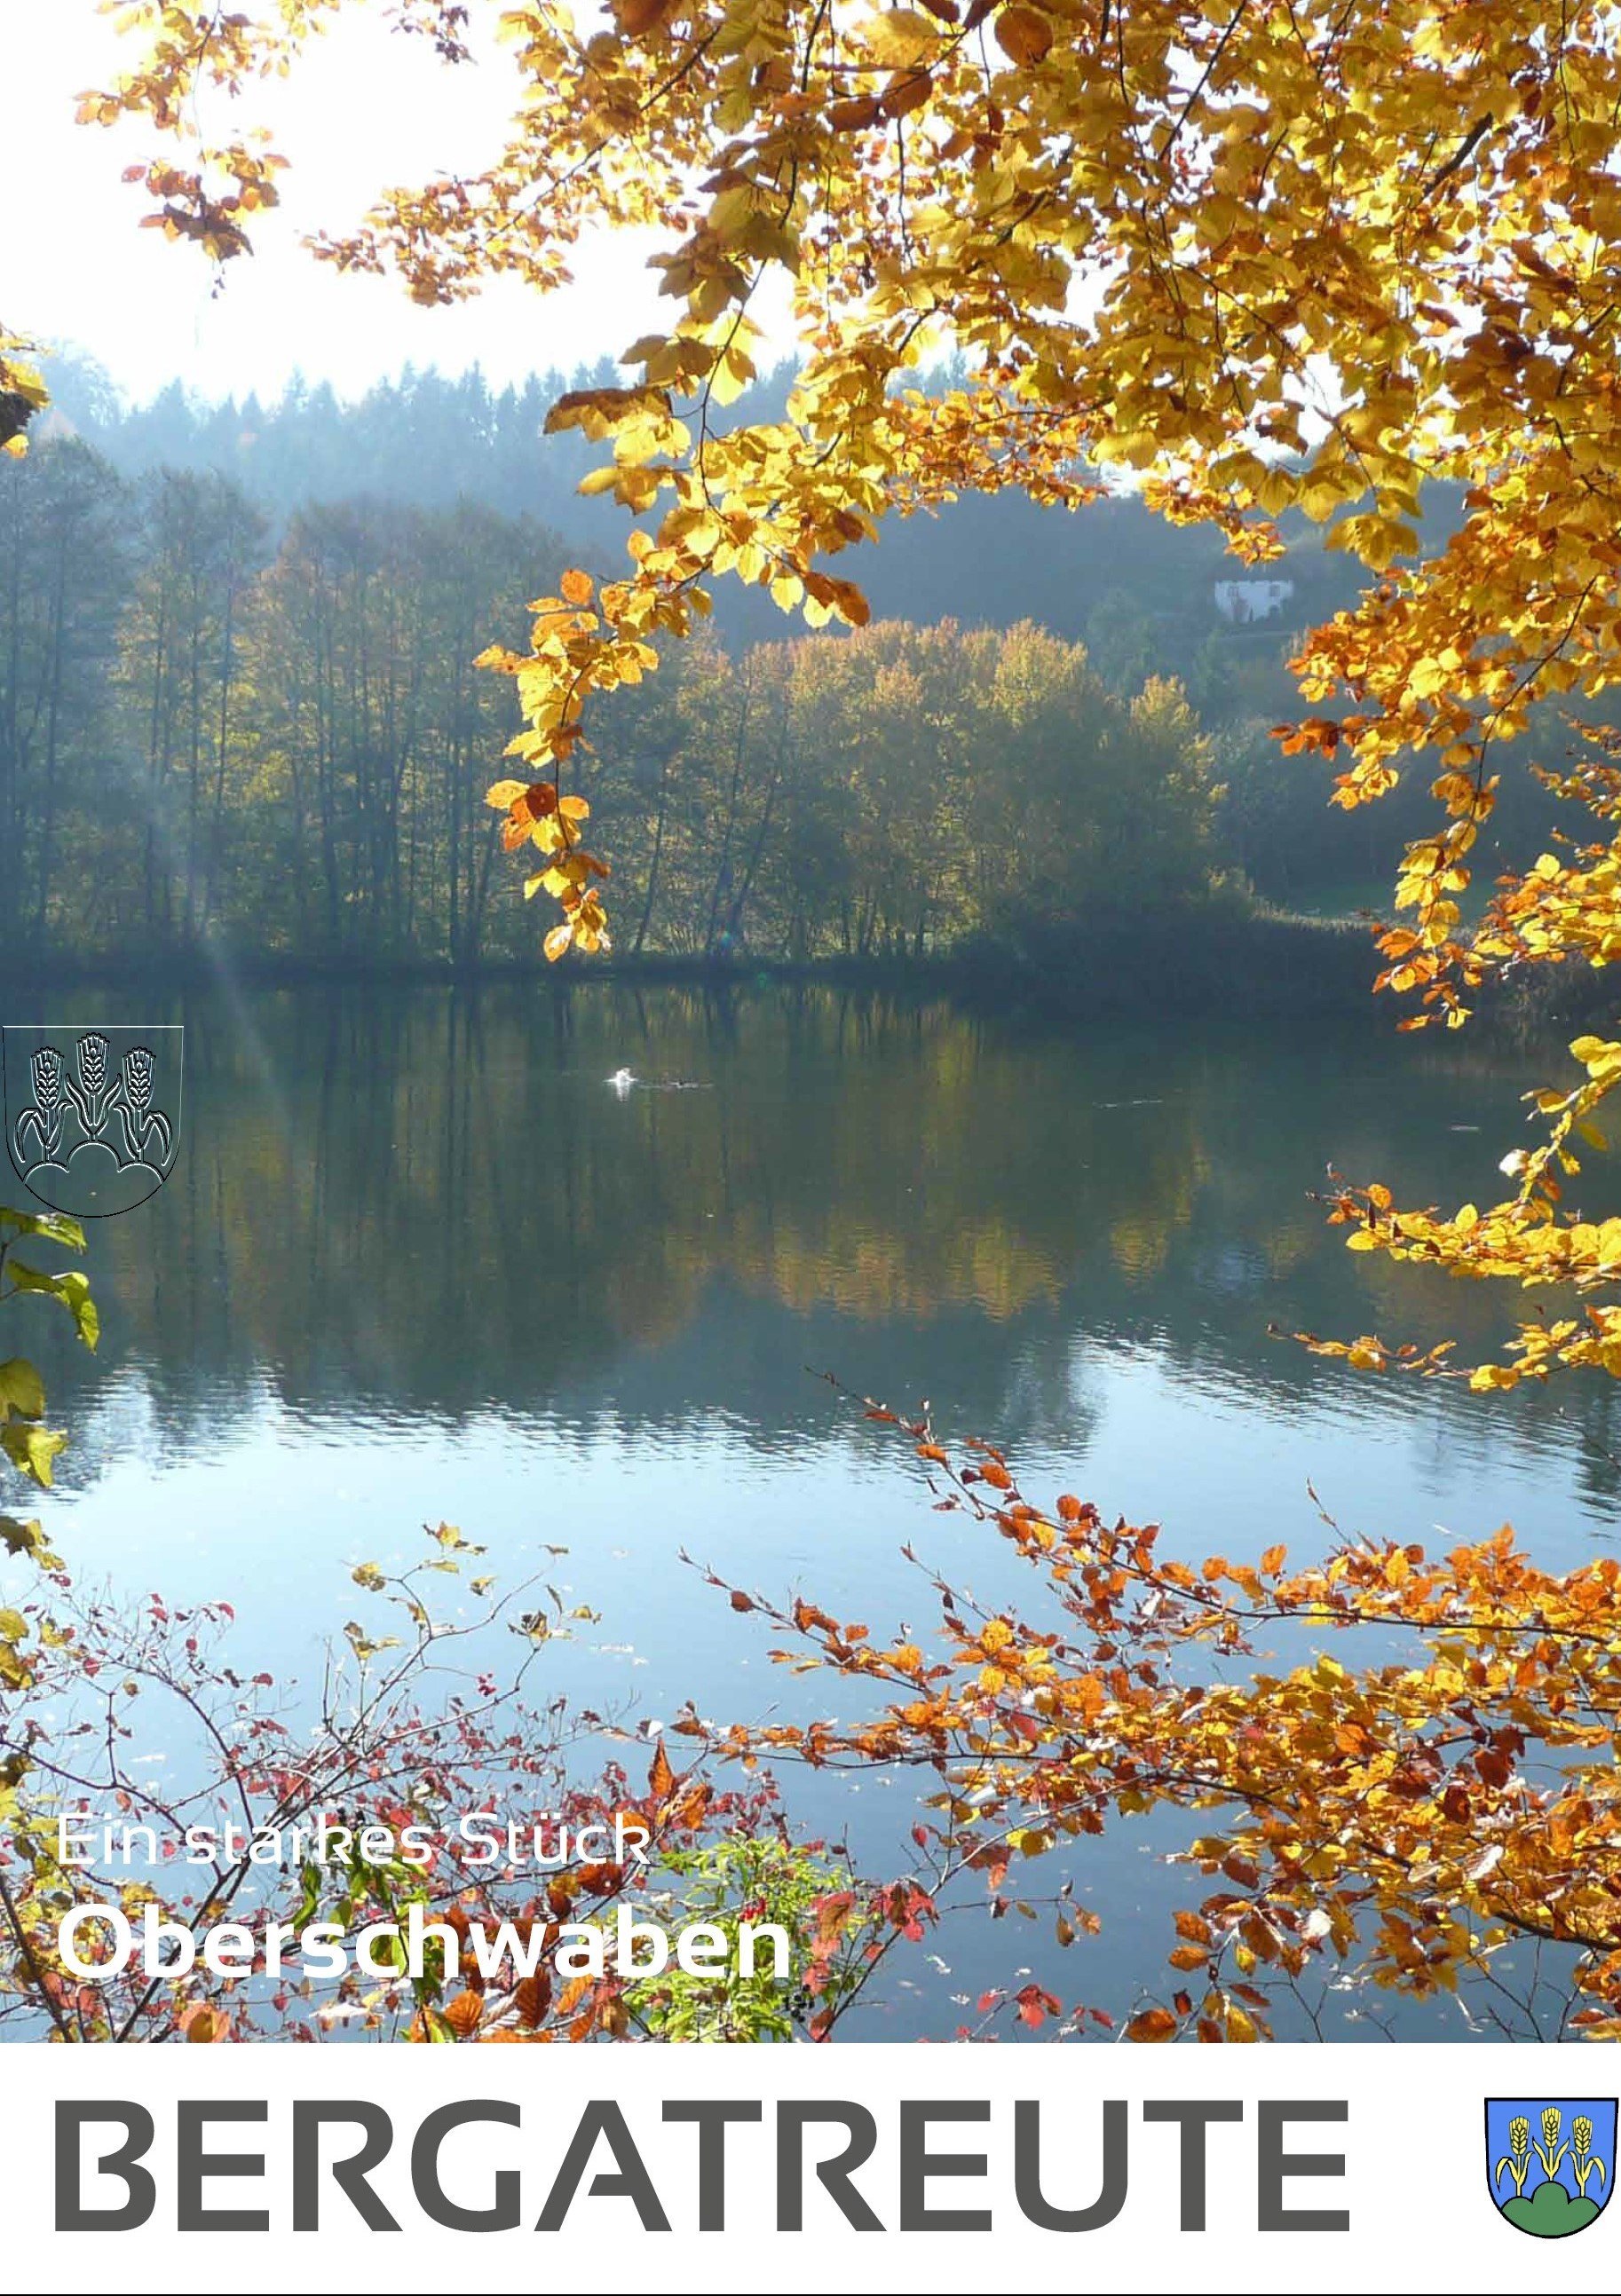  Plakat Bergatreute See und Herbstlaub 